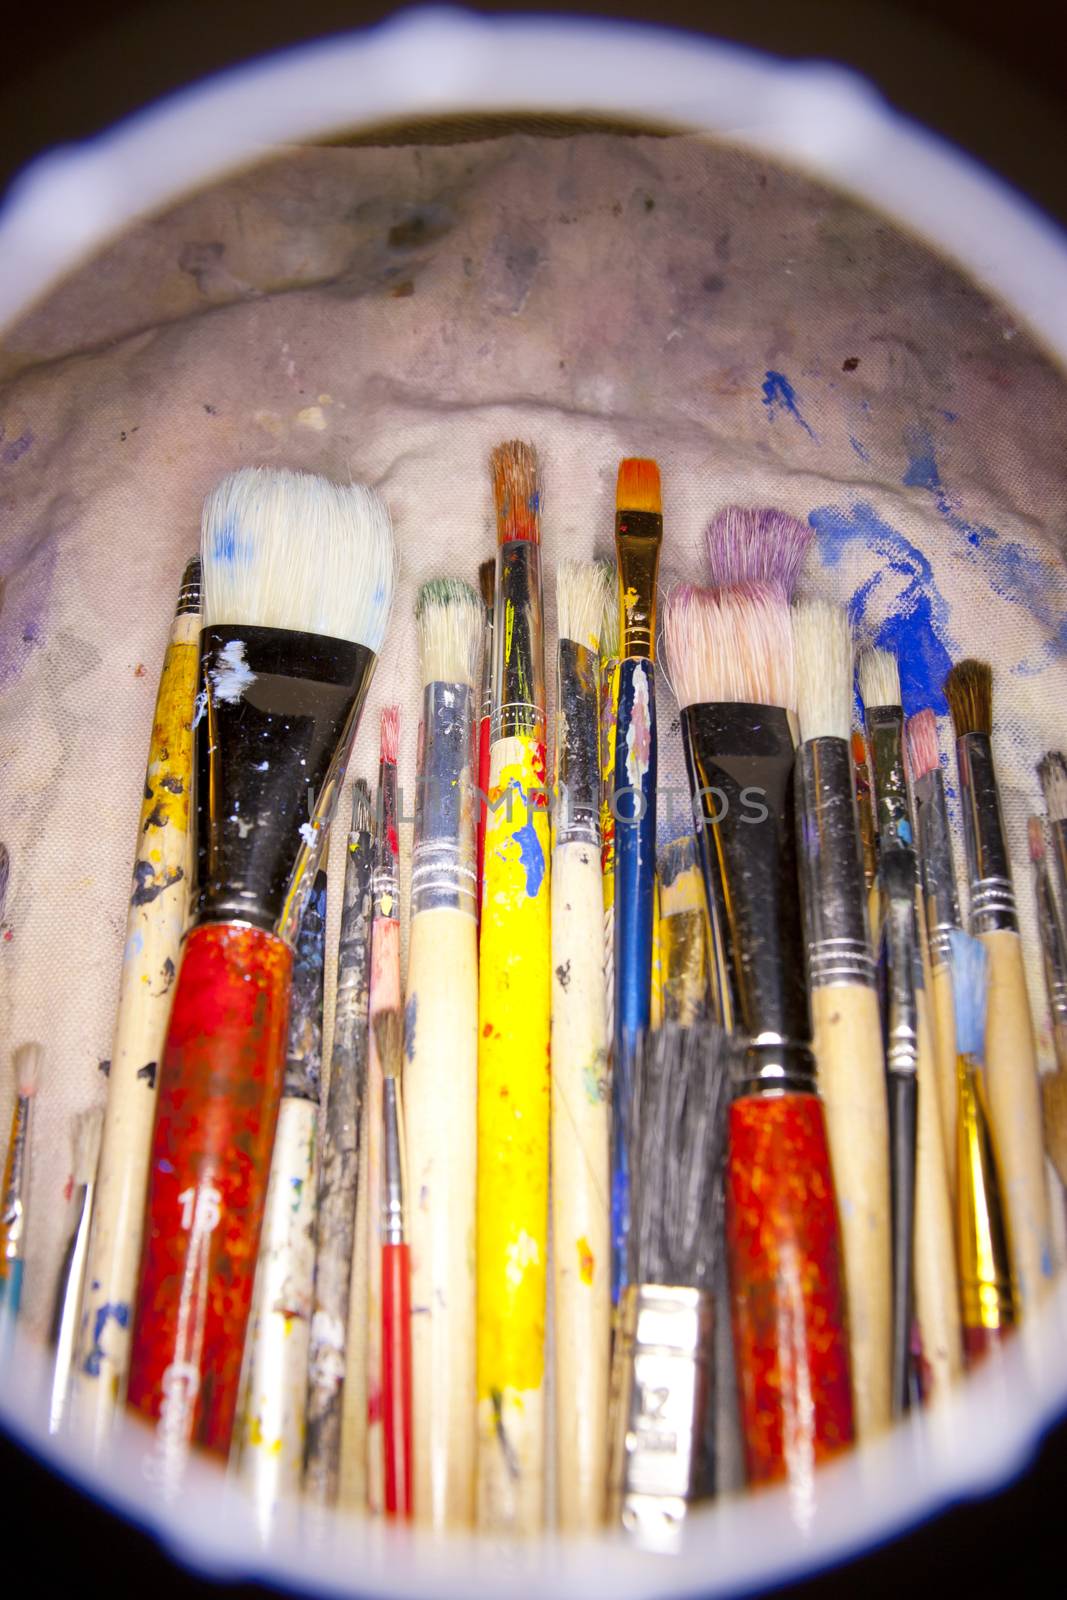 various artist brushes by morrbyte